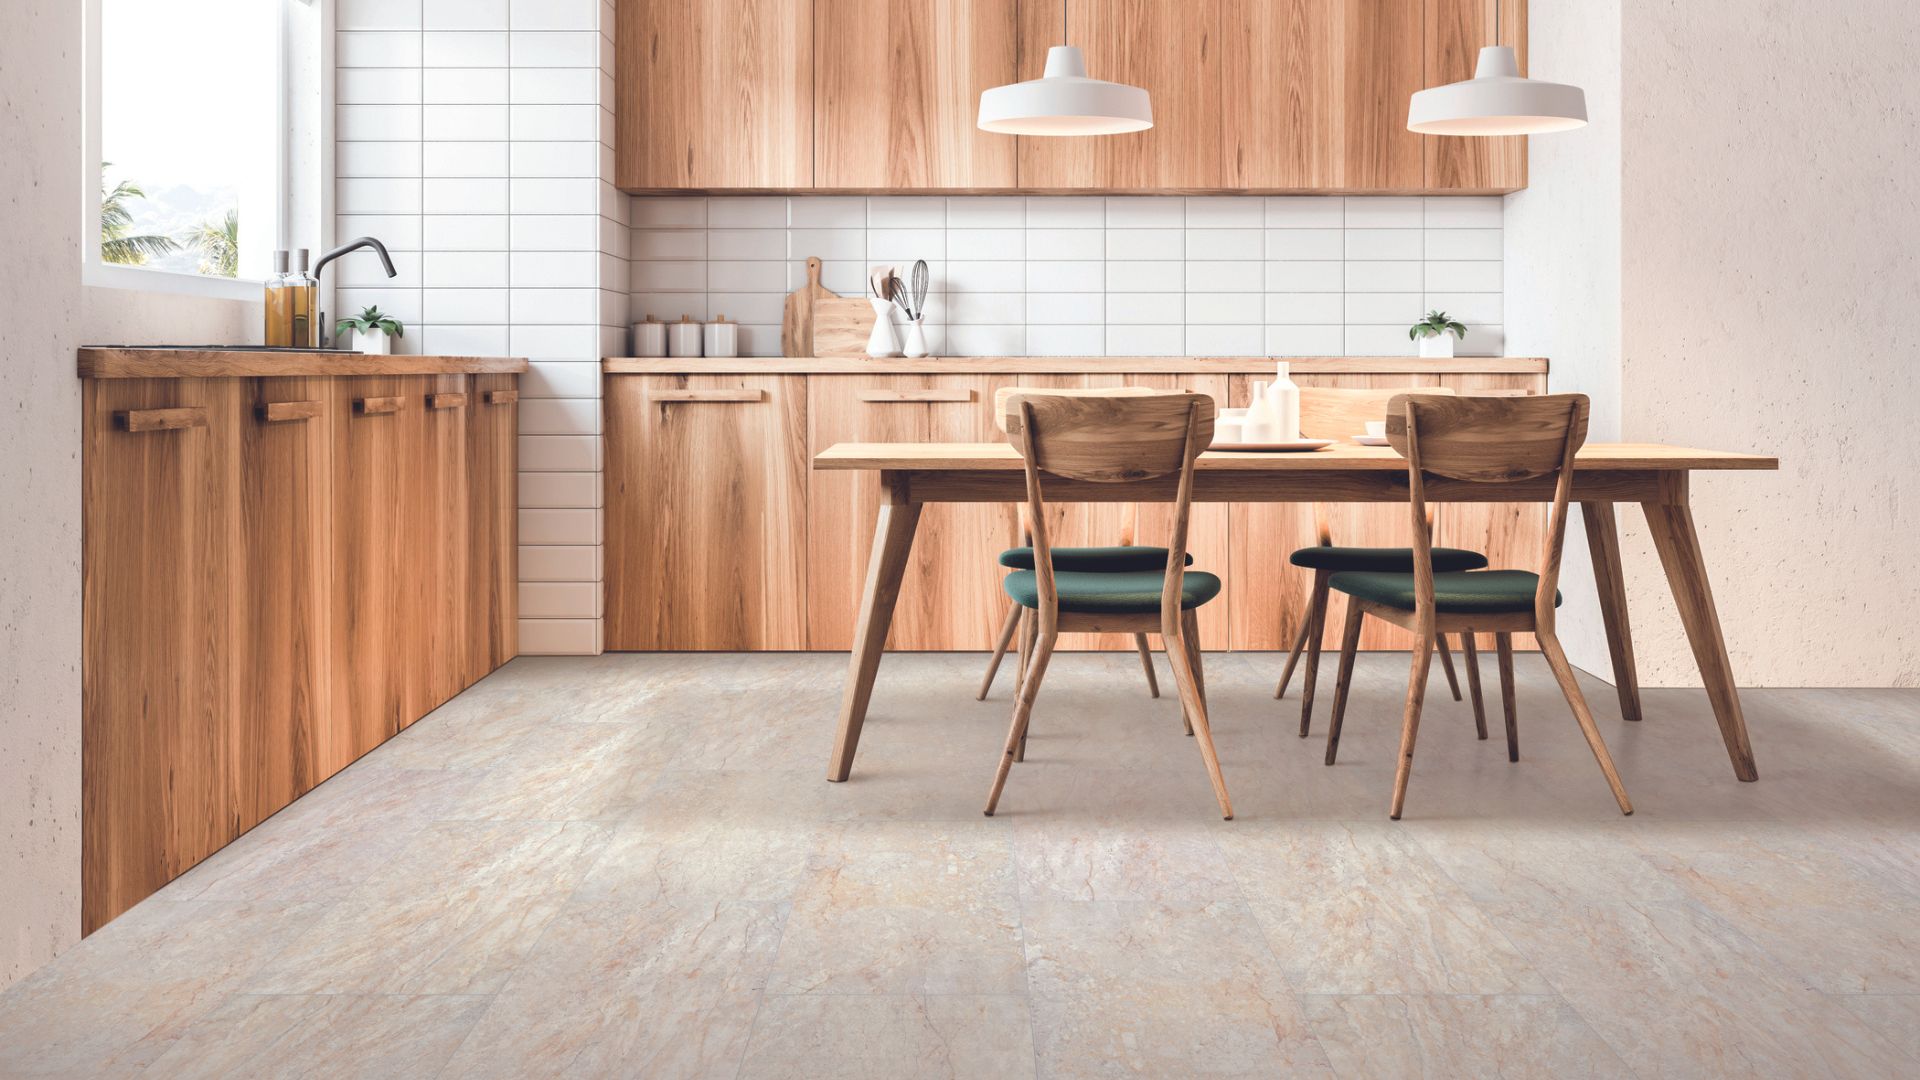 Tile flooring in a modern kitchen.